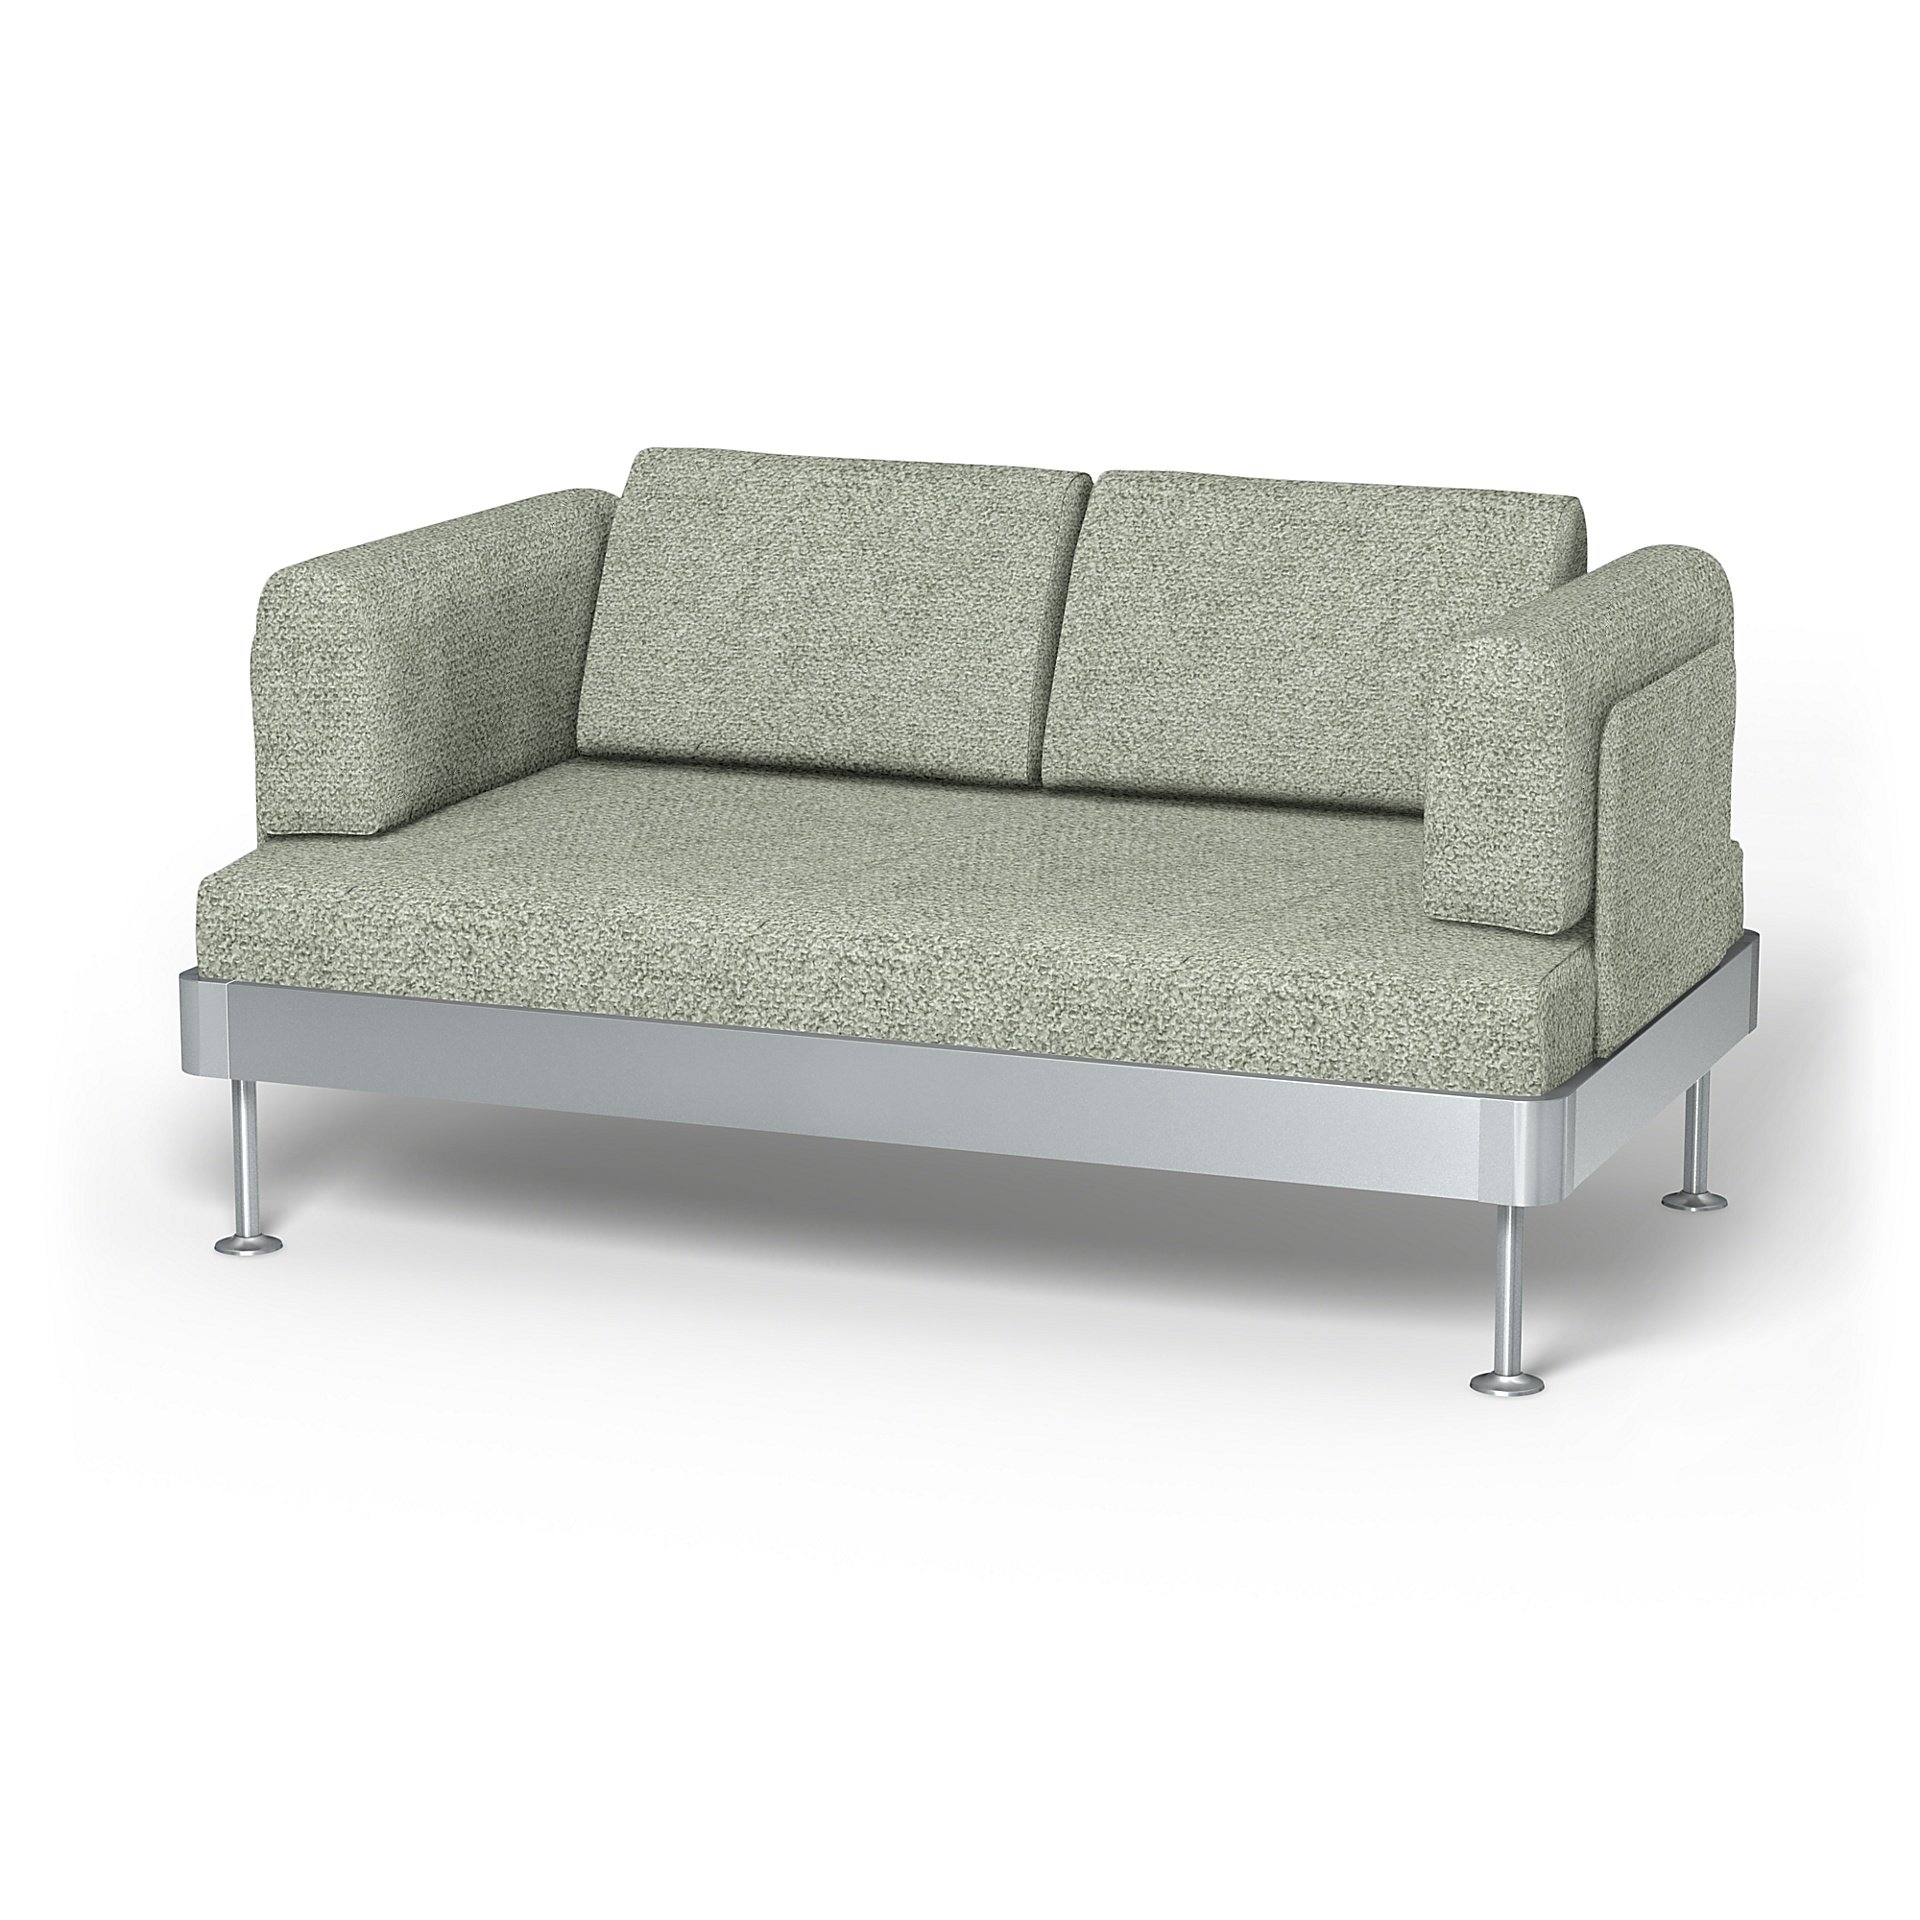 IKEA - Delaktig 2 Seater Sofa Cover, Pistachio, Boucle & Texture - Bemz